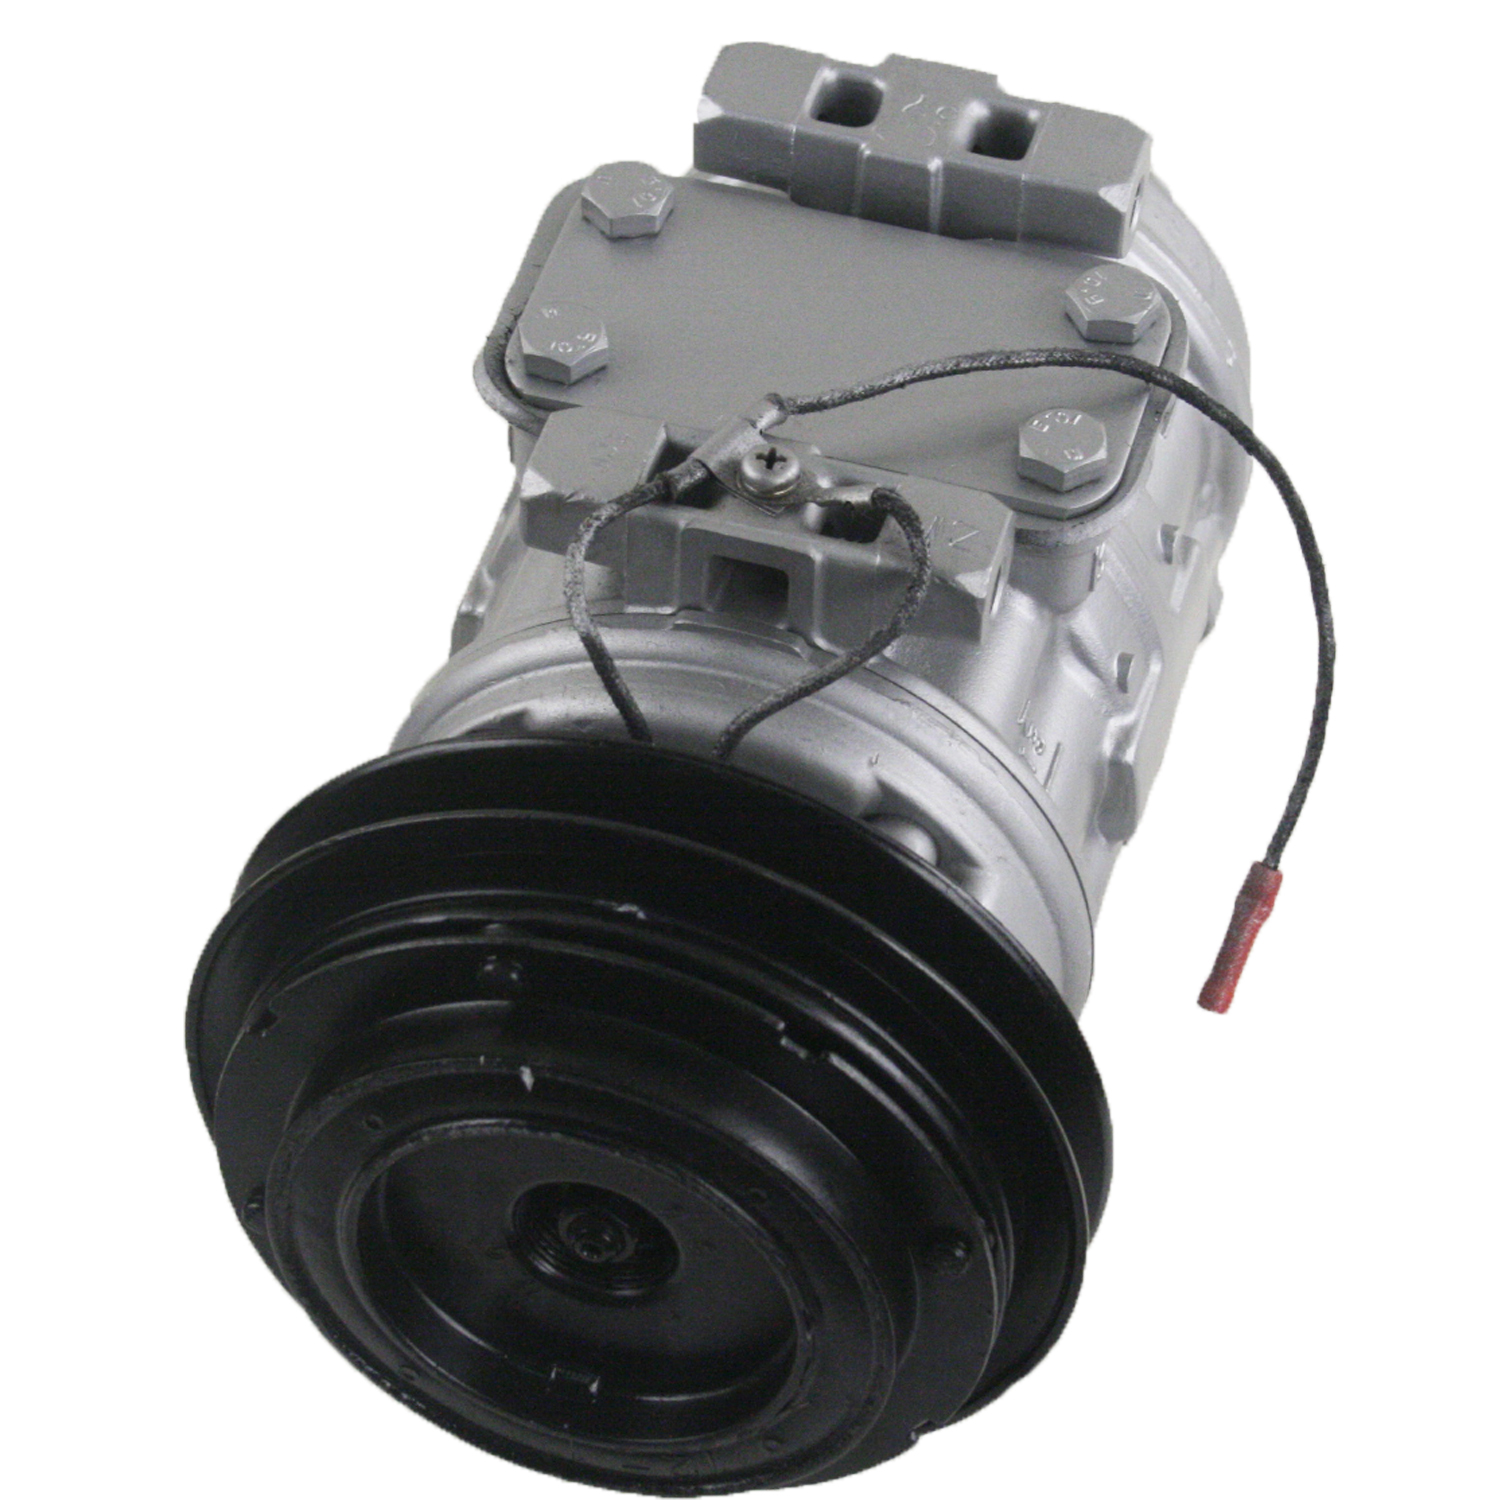 TCW Compressor 31100.102 Remanufactured Product Image field_60b6a13a6e67c